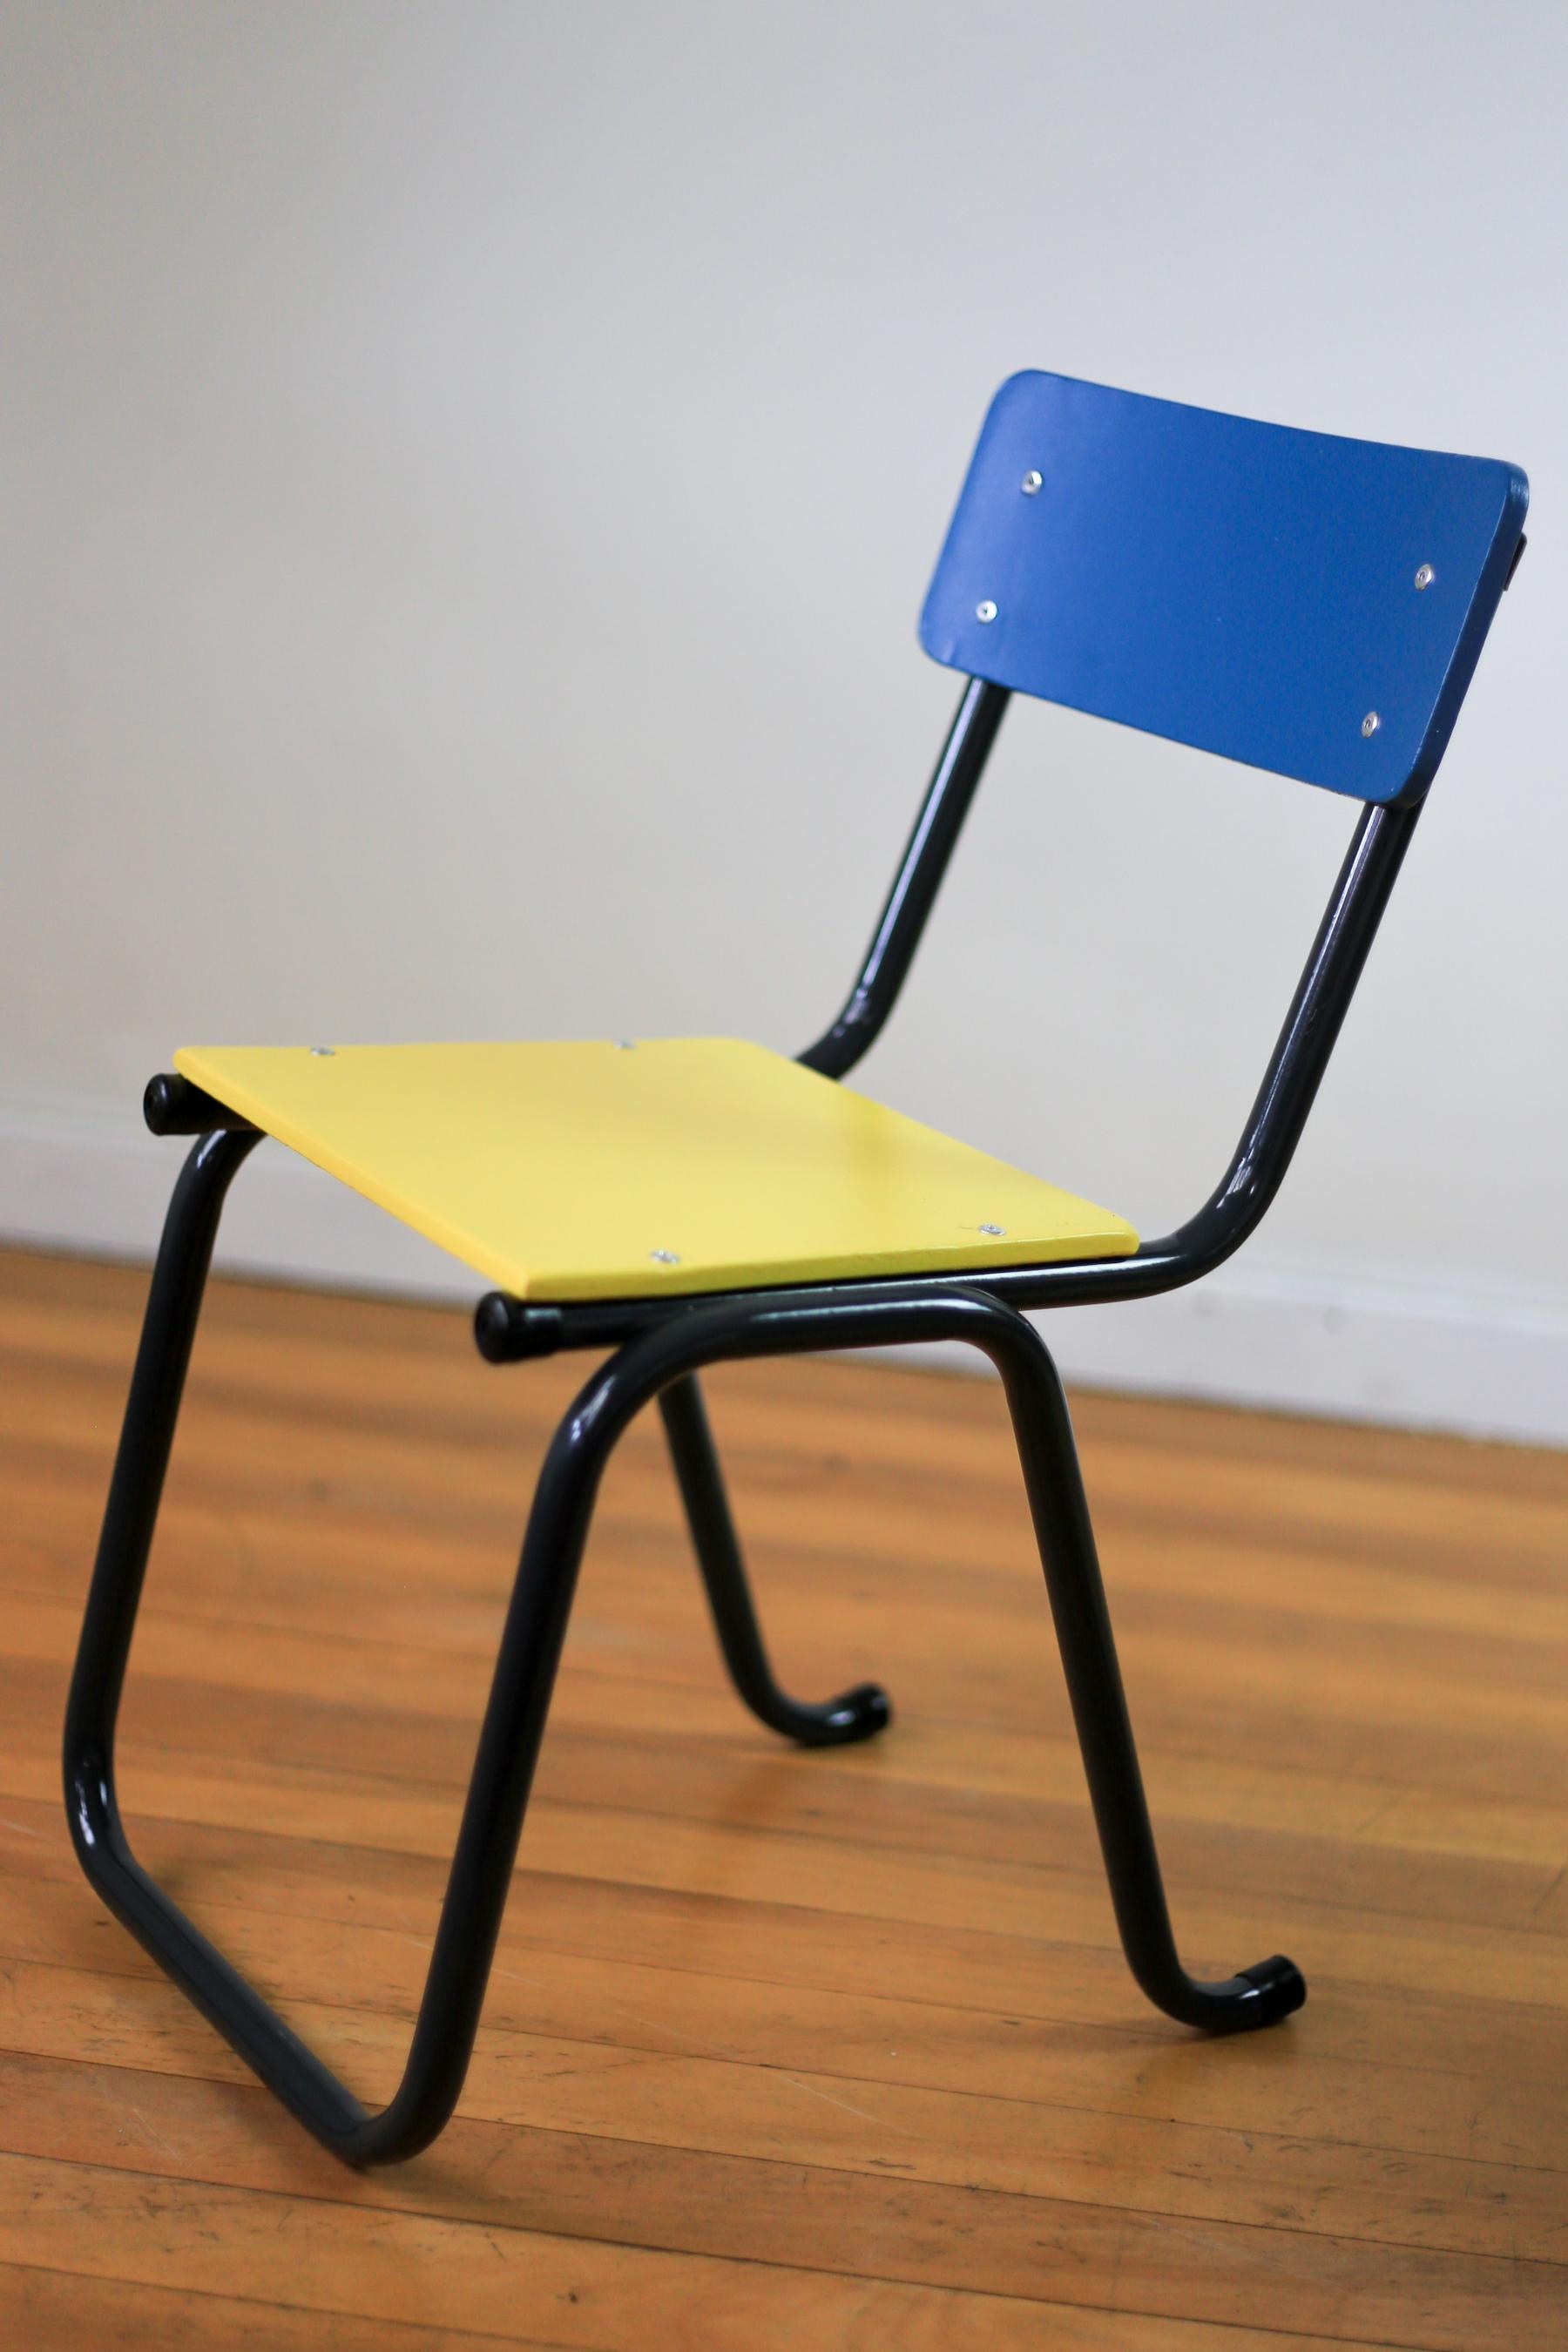 Hand-Painted Refurbished Midcentury Nursery School Chairs For Sale